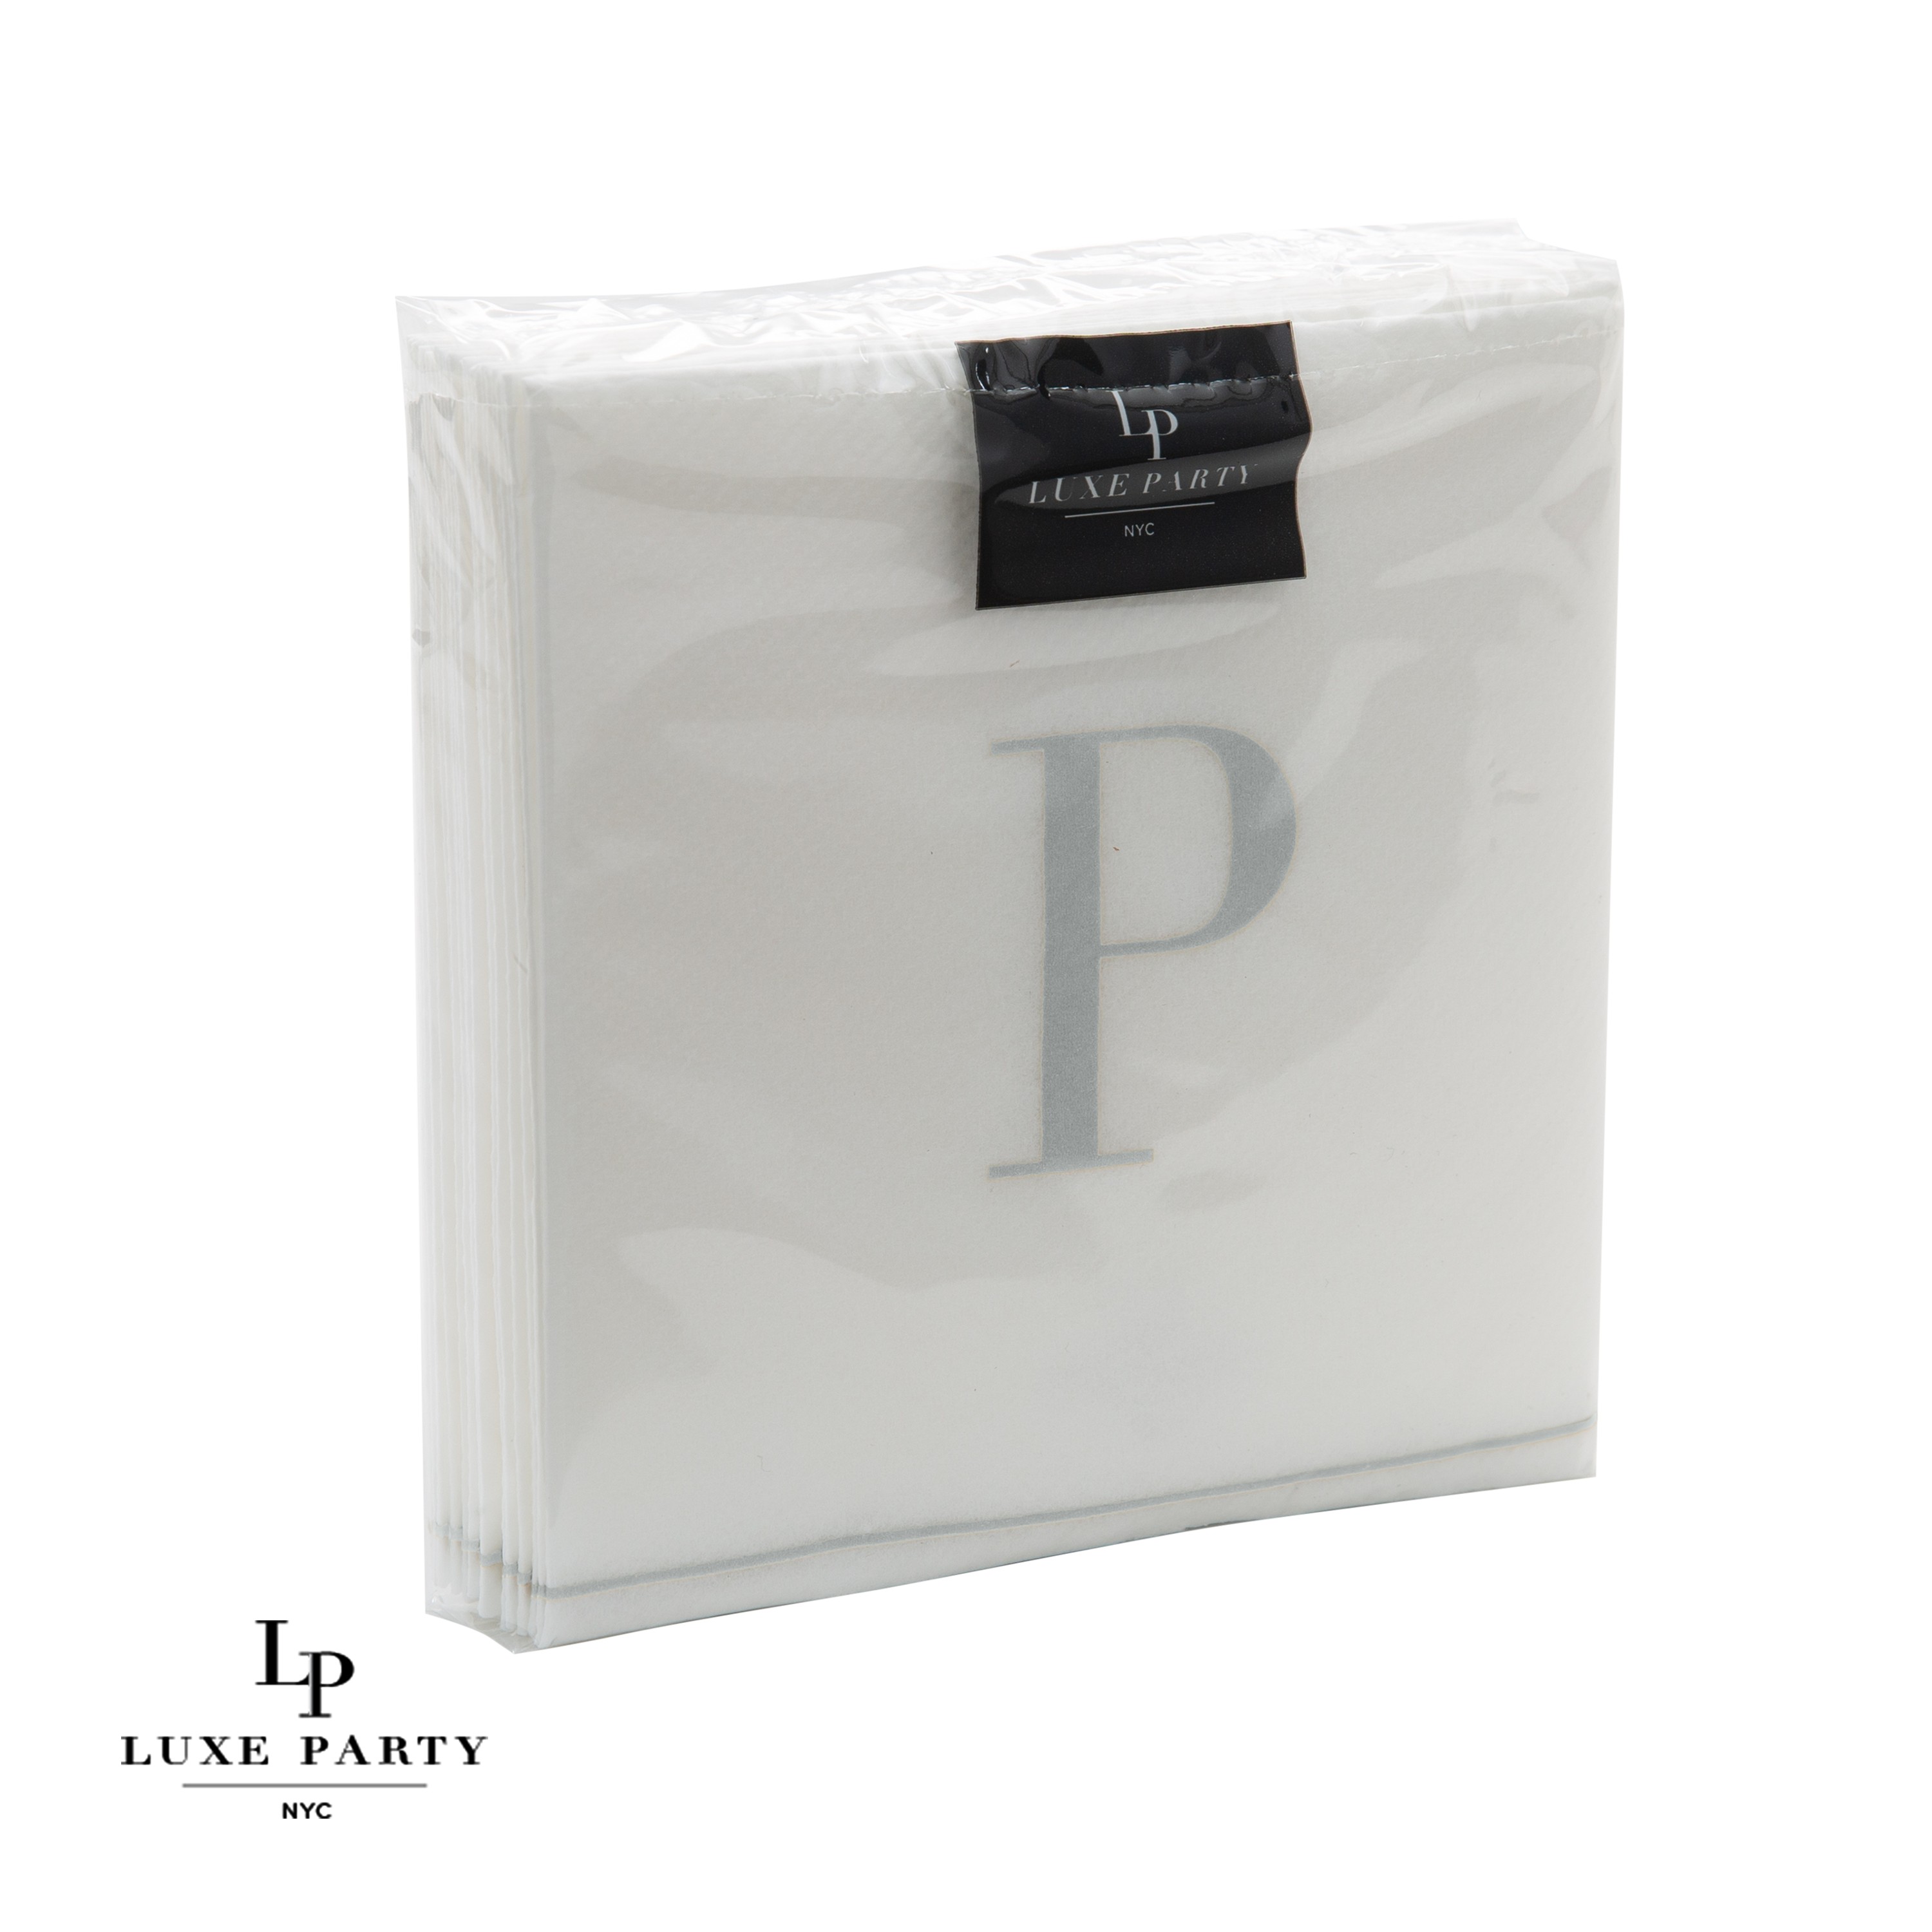 Luxe Party Bodoni Script Single Initial Silver Letter P Cocktail Napkins - 16 pcs